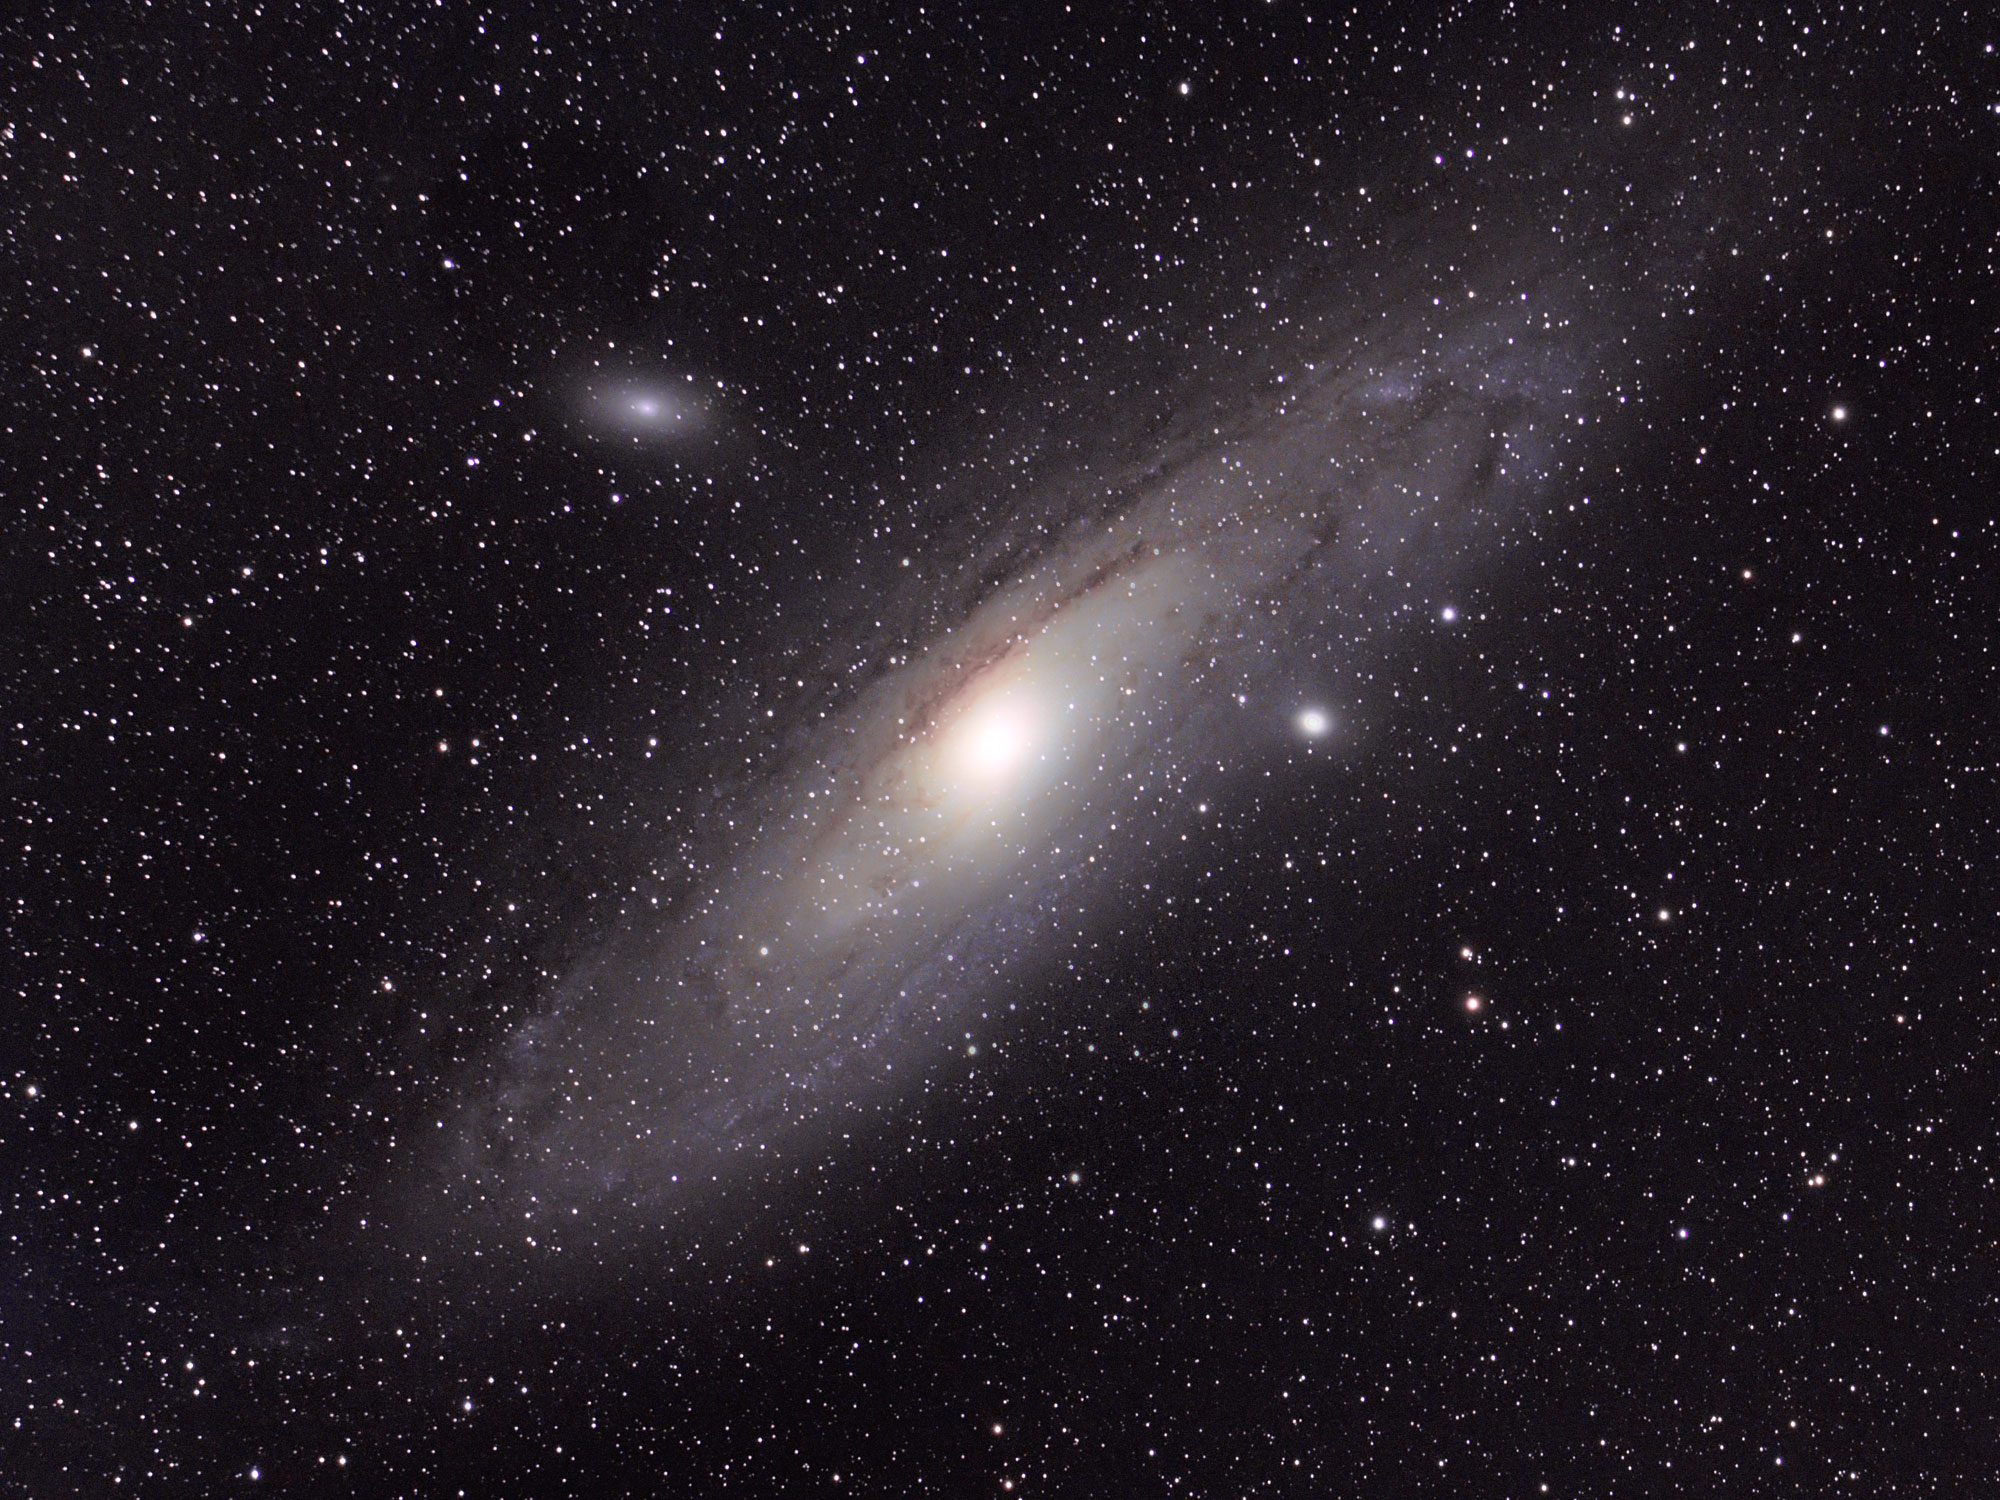 Andromeda galaxy William Optics GT71 & ASI294MC Pro